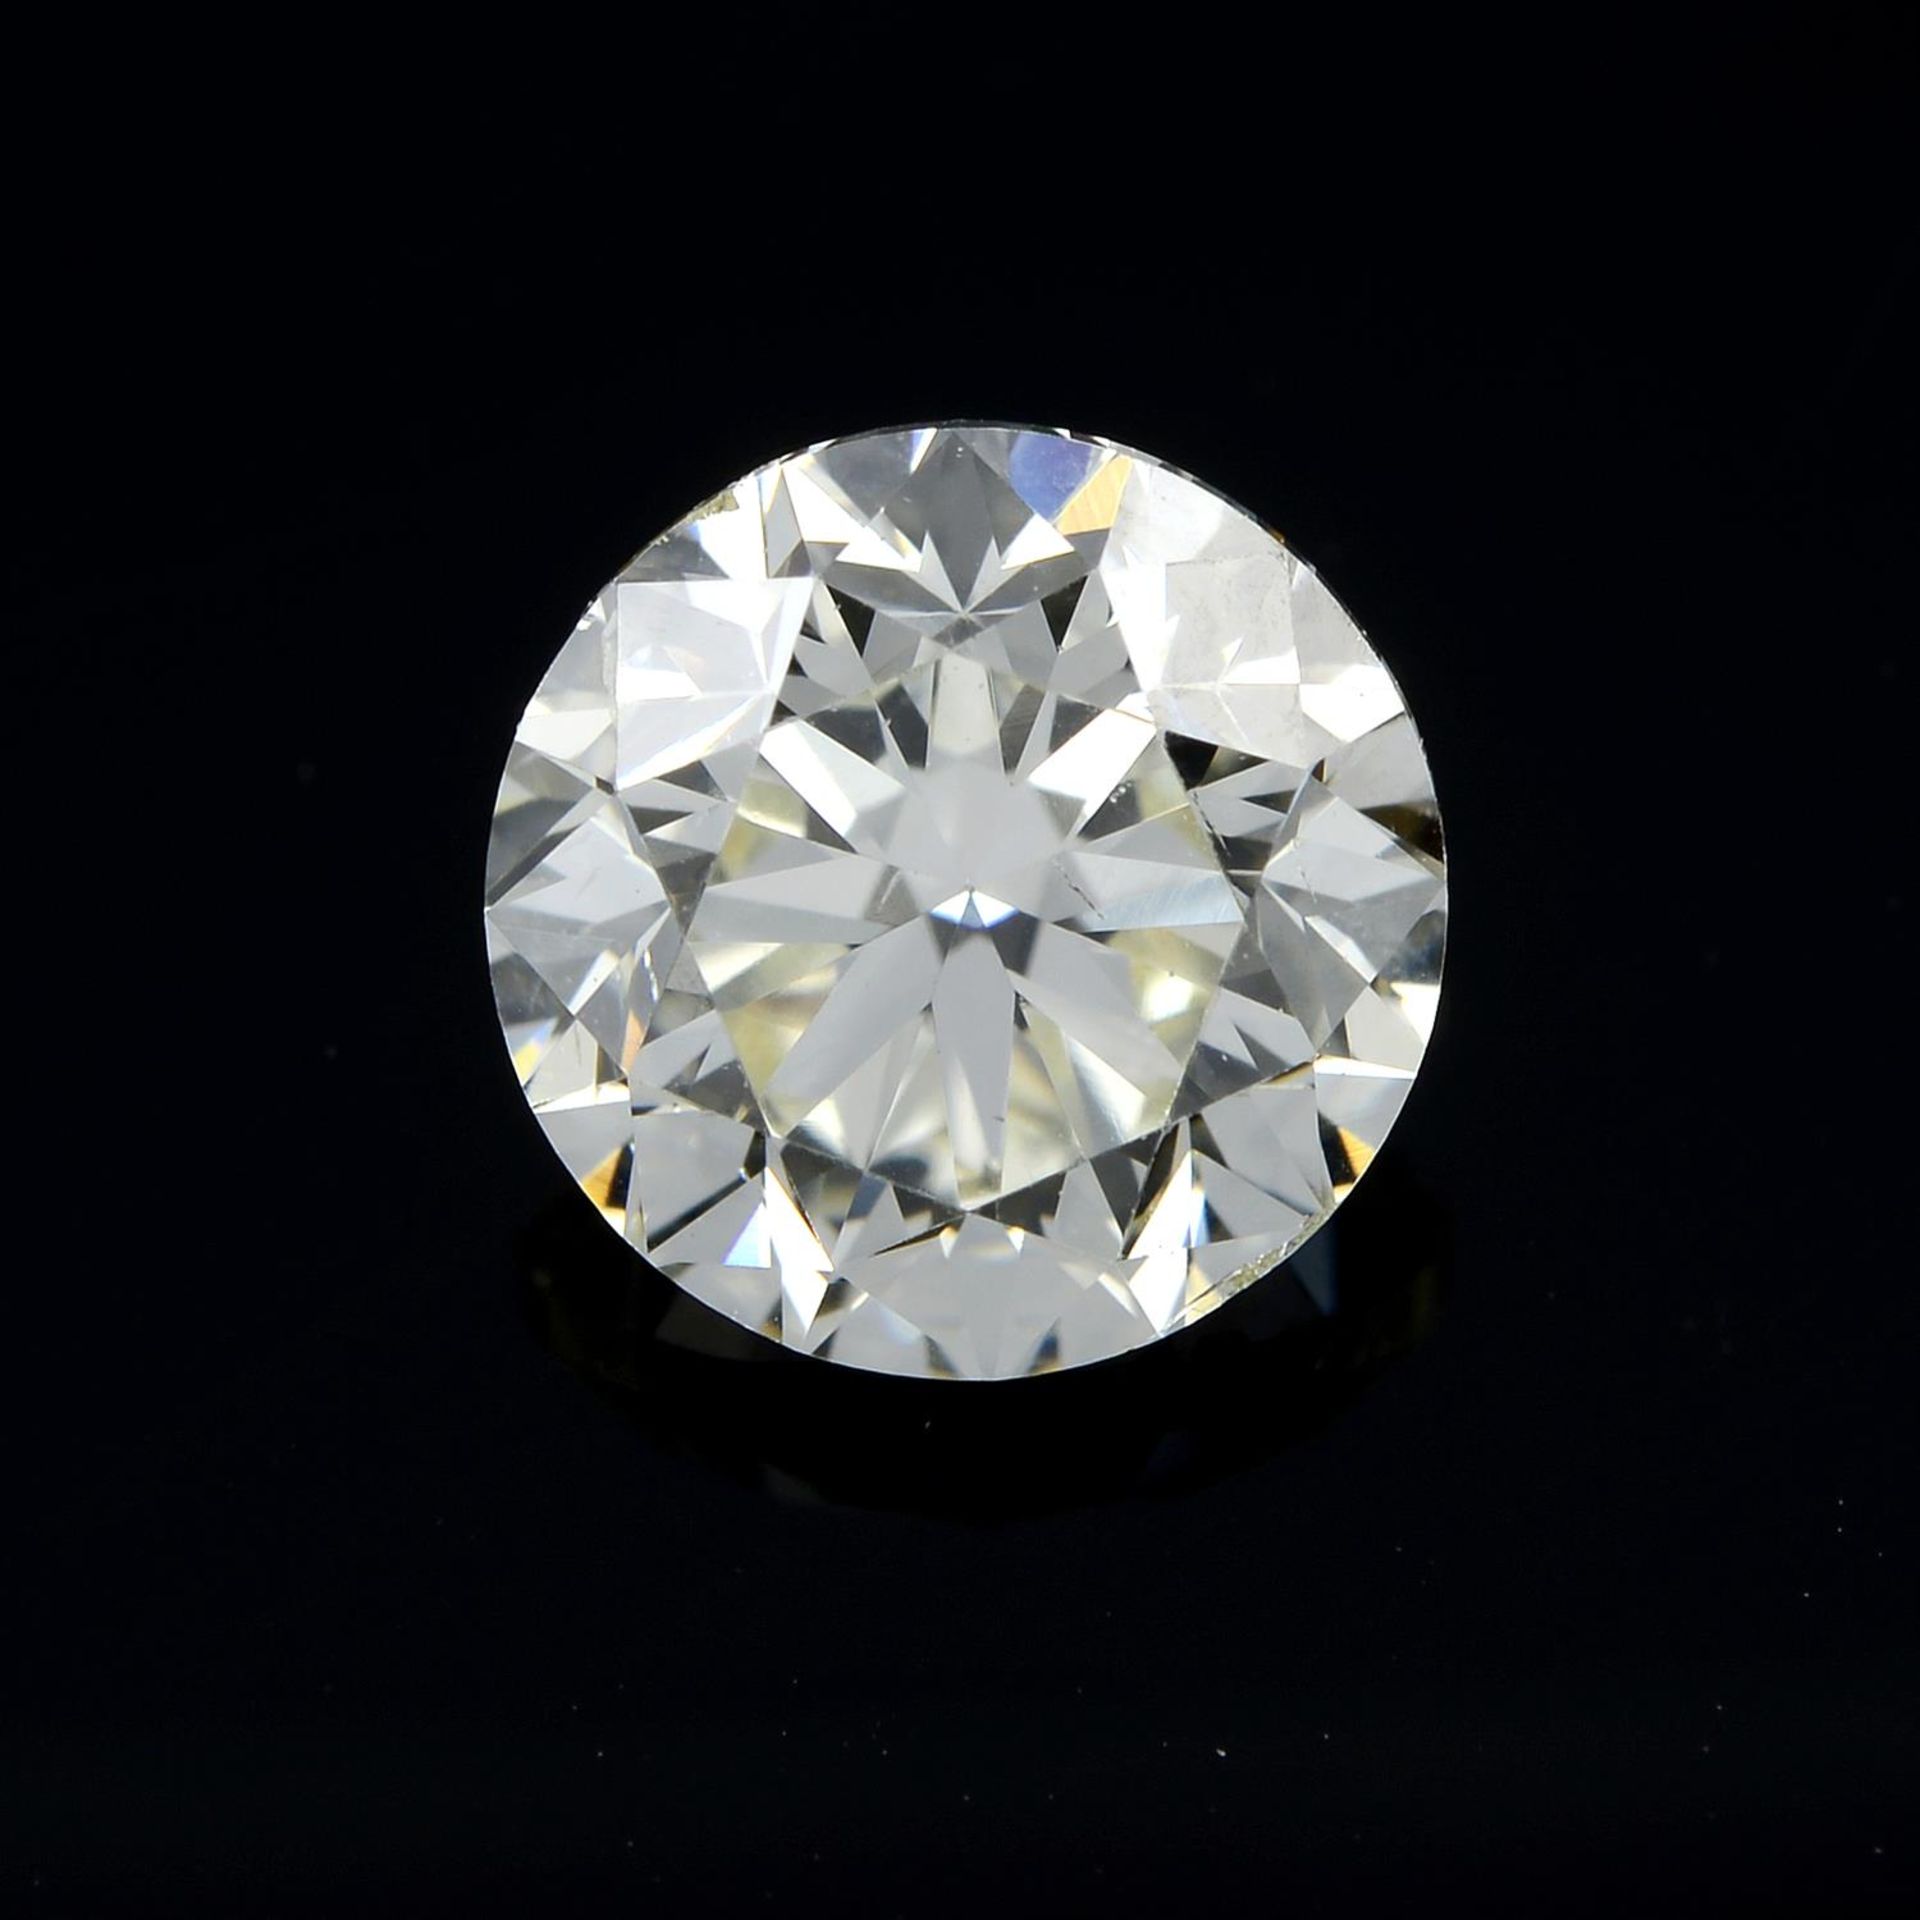 A round brilliant-cut diamond, weight 1.03cts.